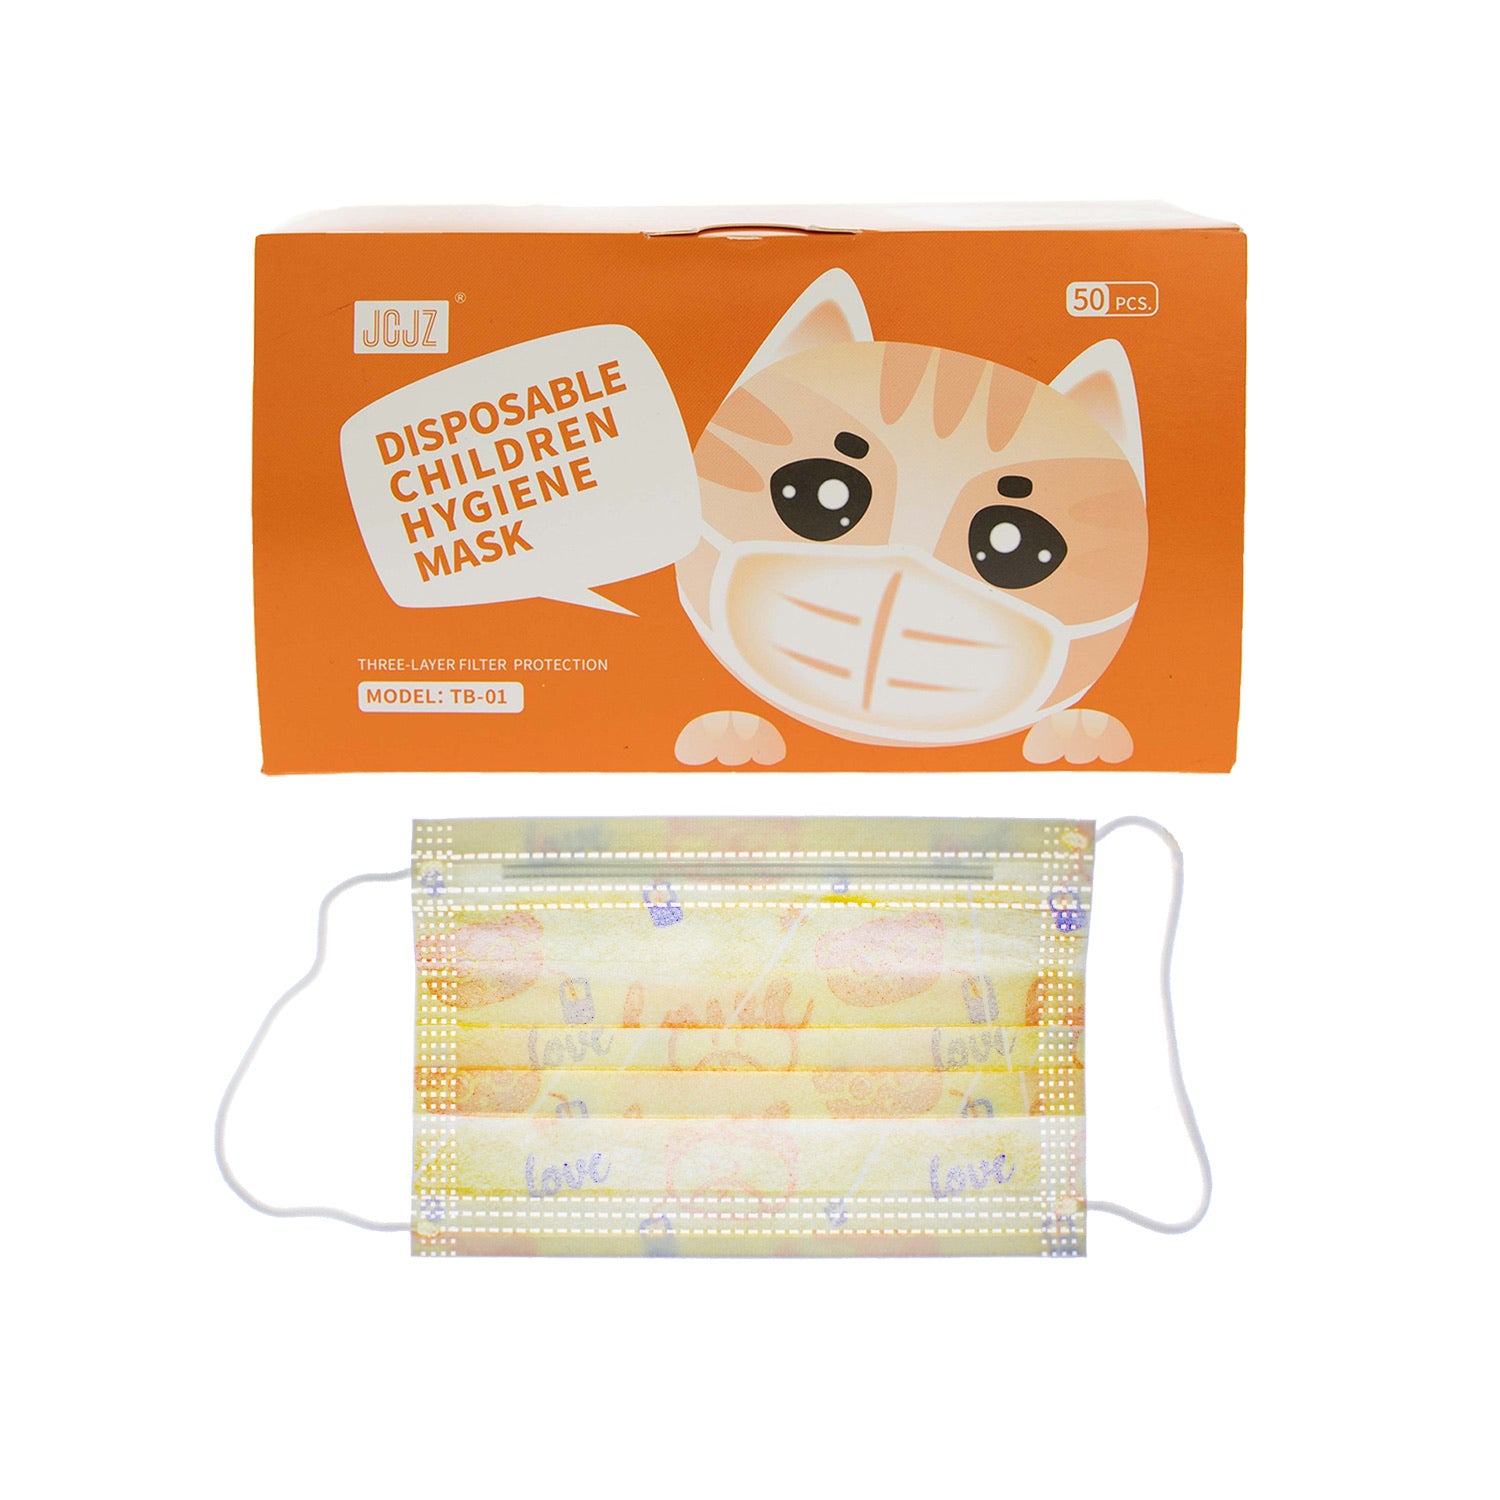 3-Ply Disposable Children Hygiene Mask, Kids Mask, 50 PCS - BOX